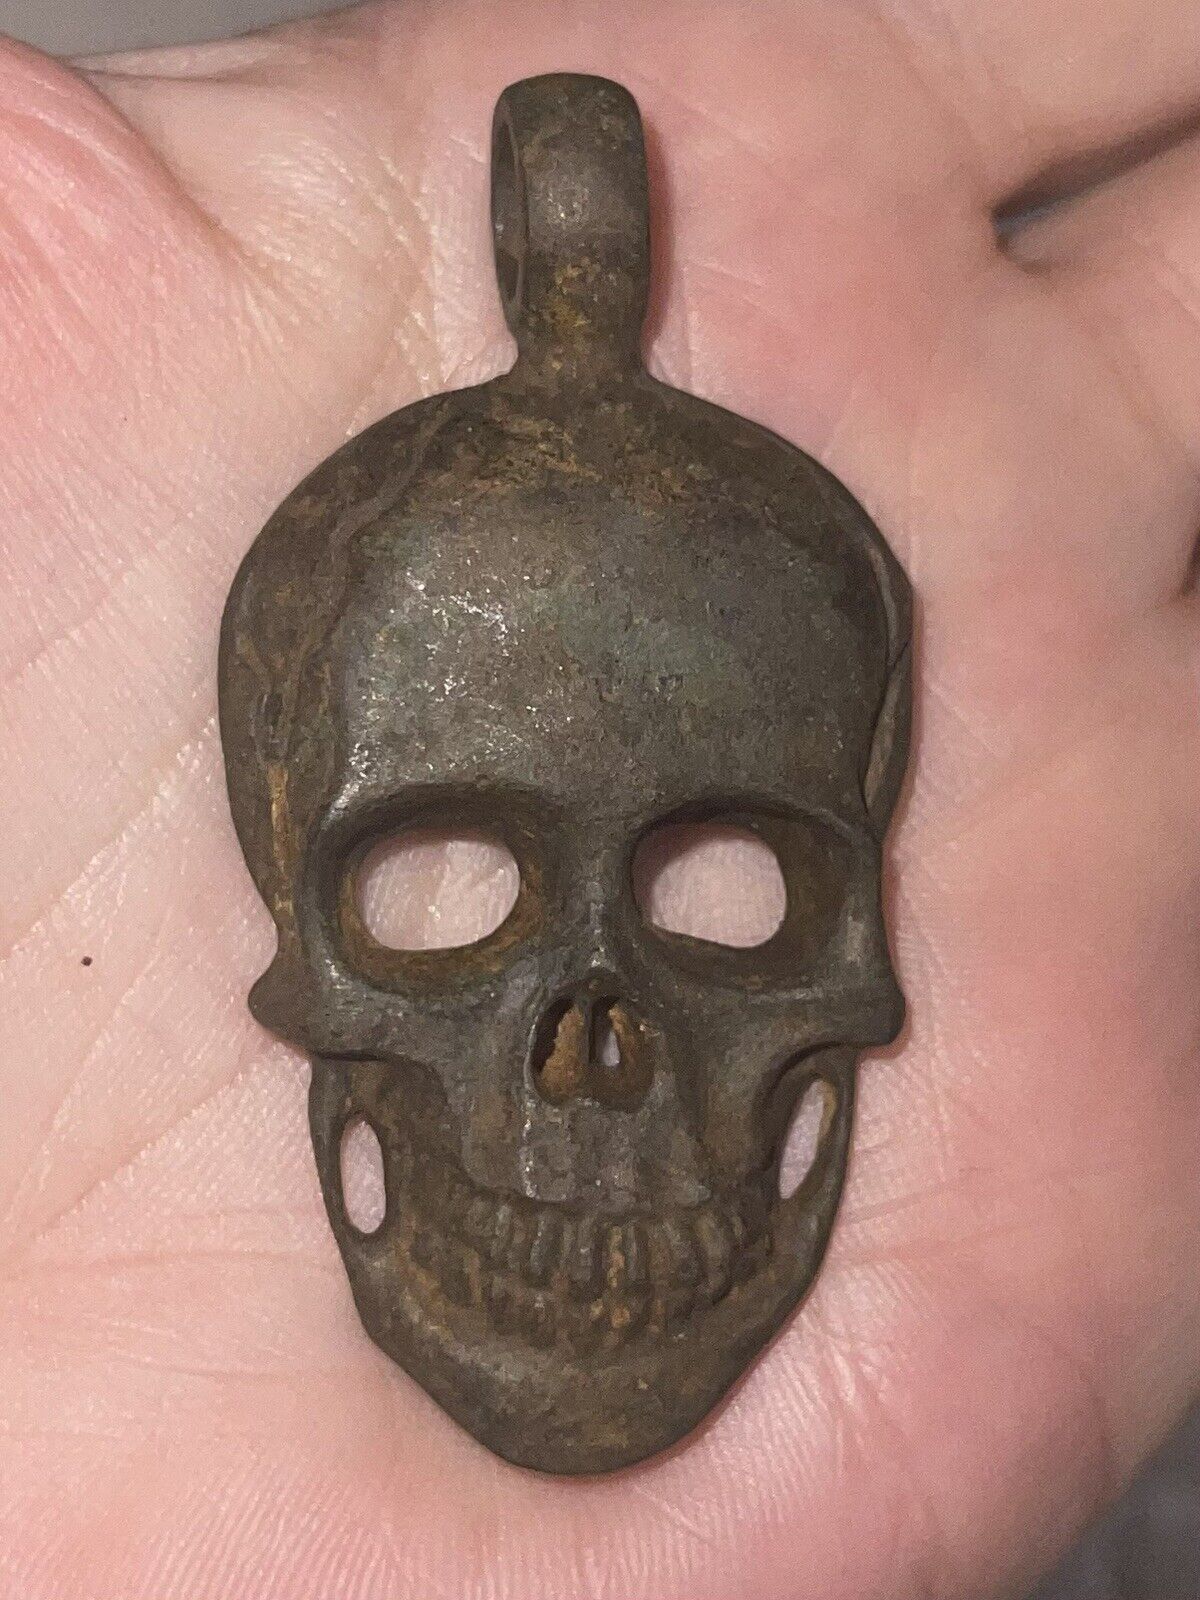 Unearthed Antique Skull Skeleton Pendant Necklace Amulet - 1900s